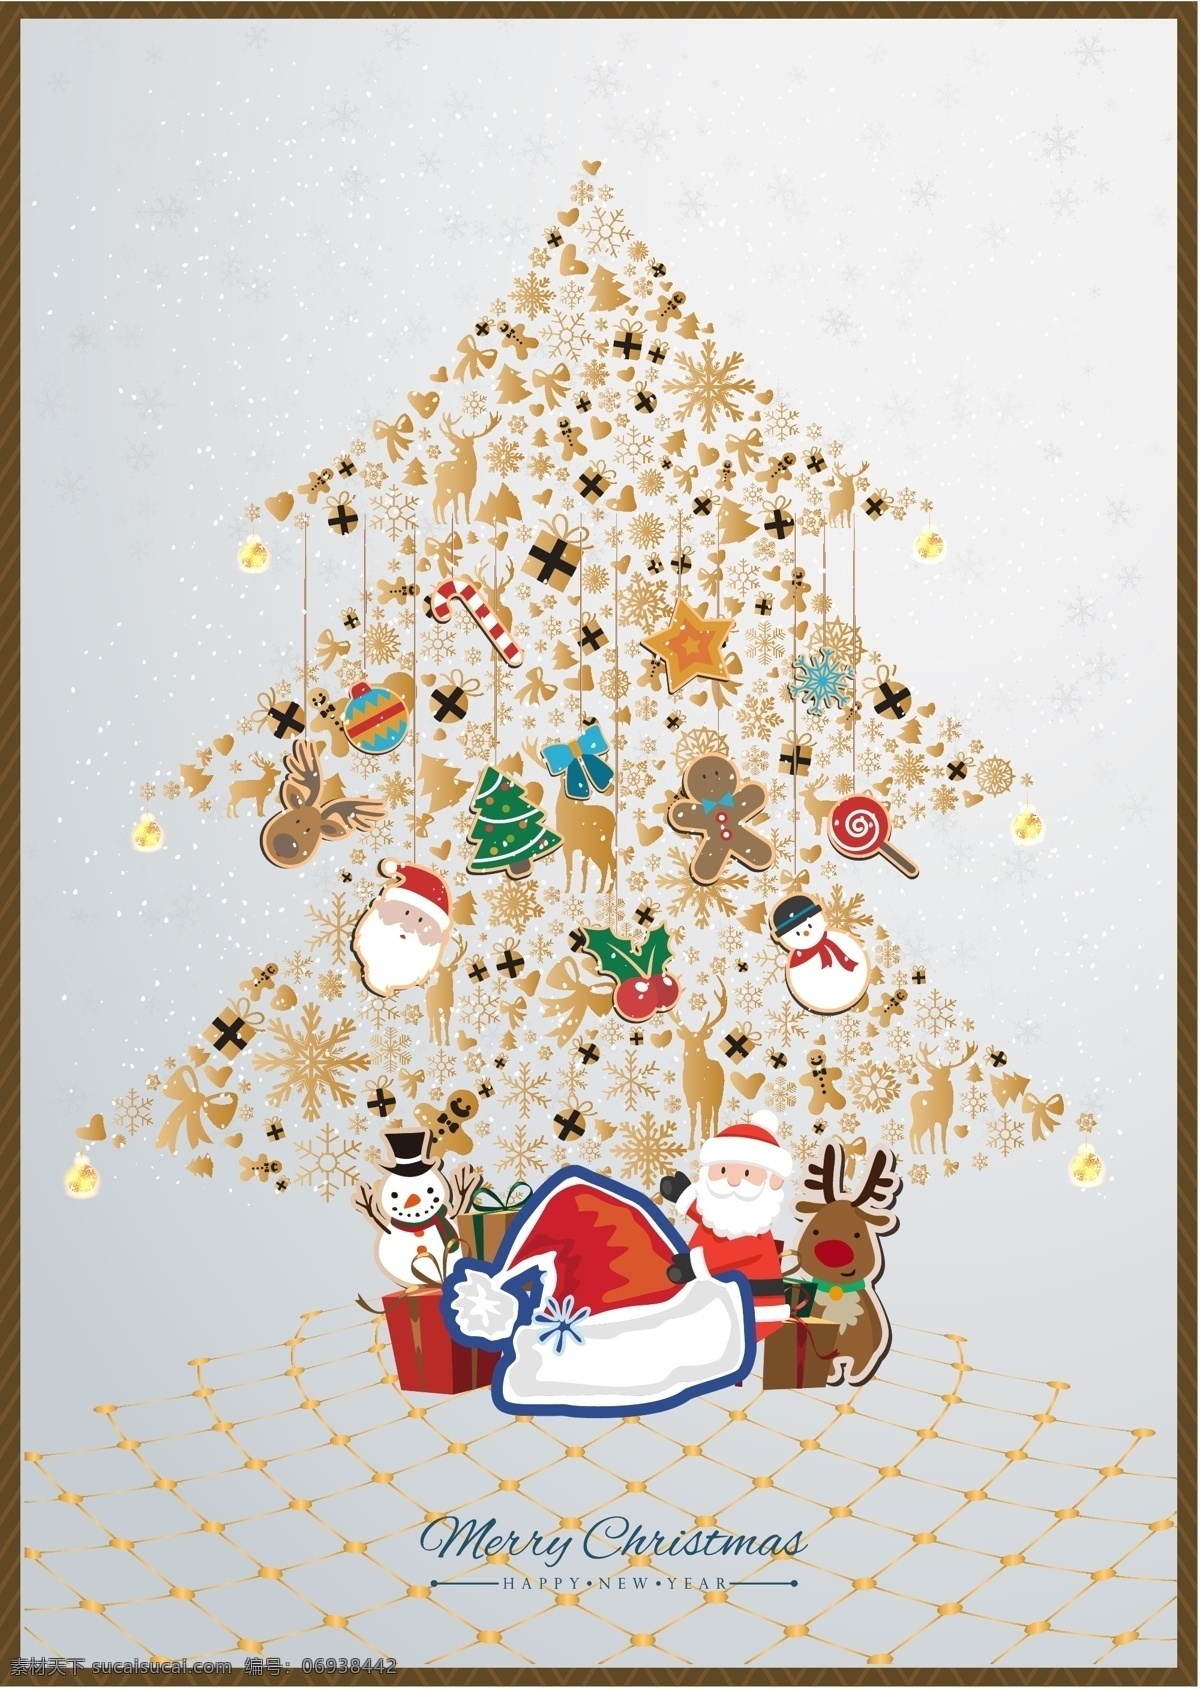 merrychristmas 圣诞节 插画 圣诞老人 礼物 雪花 圣诞 圣诞树 雪人 驯鹿 金色 雪